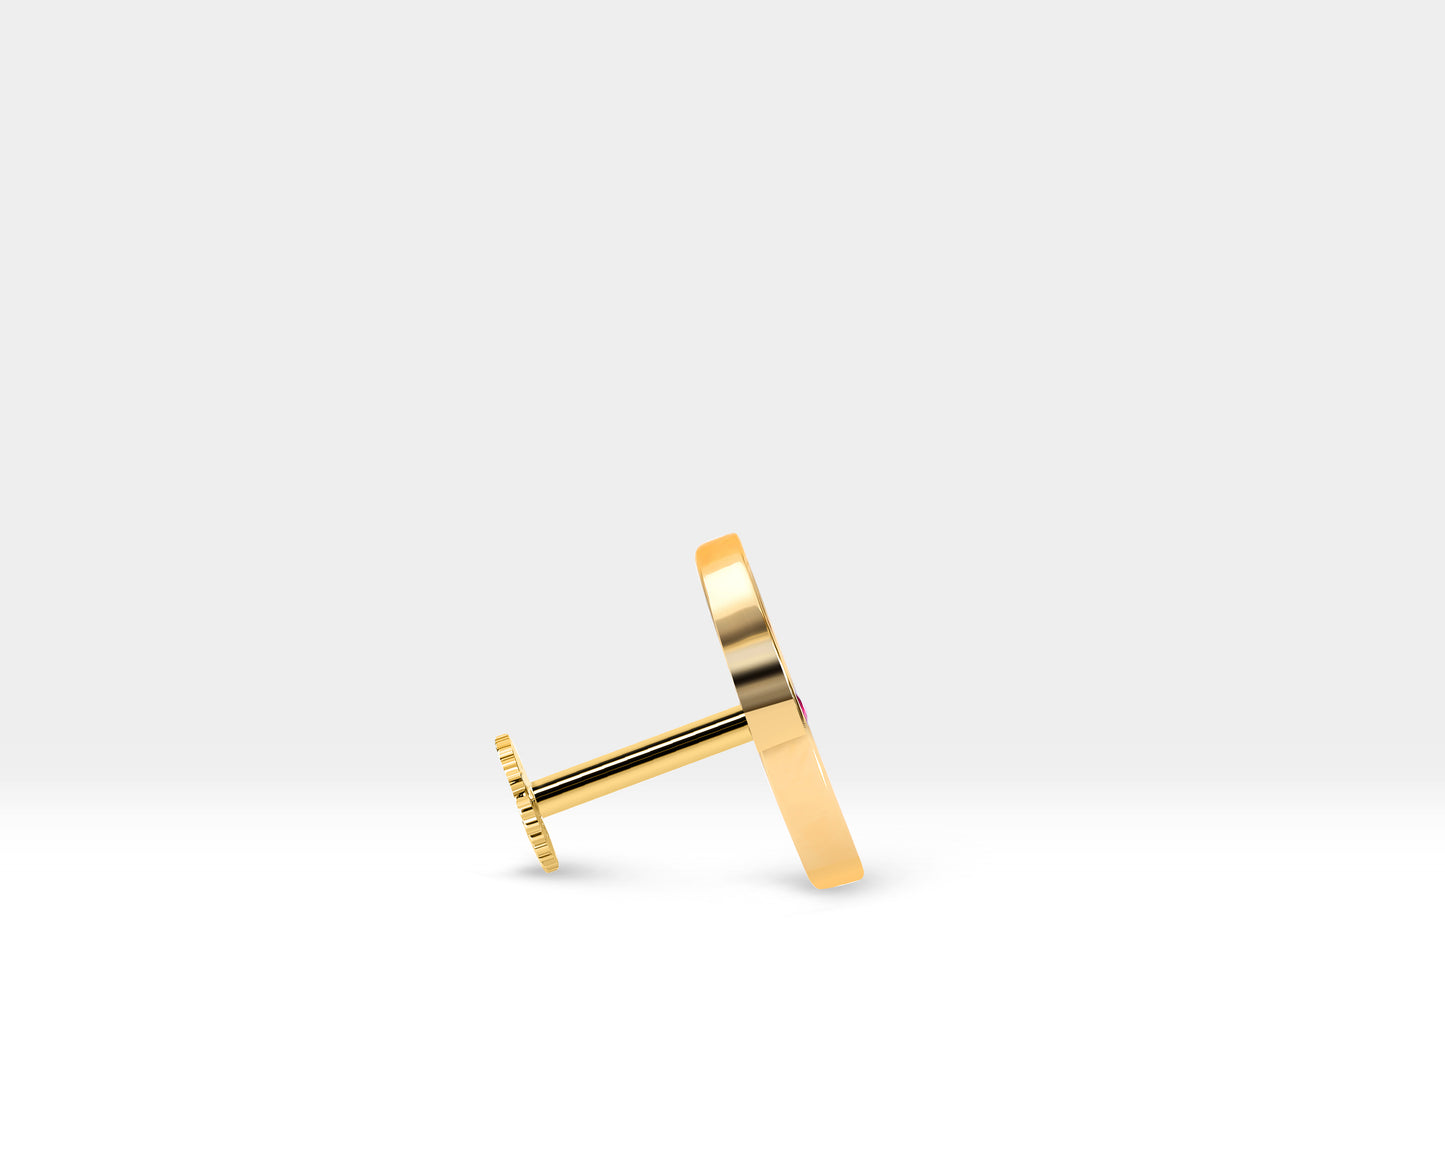 14K Solid Gold Cartilage Moon Design Ruby Piercing,16G(1.2mm)Stud Earring